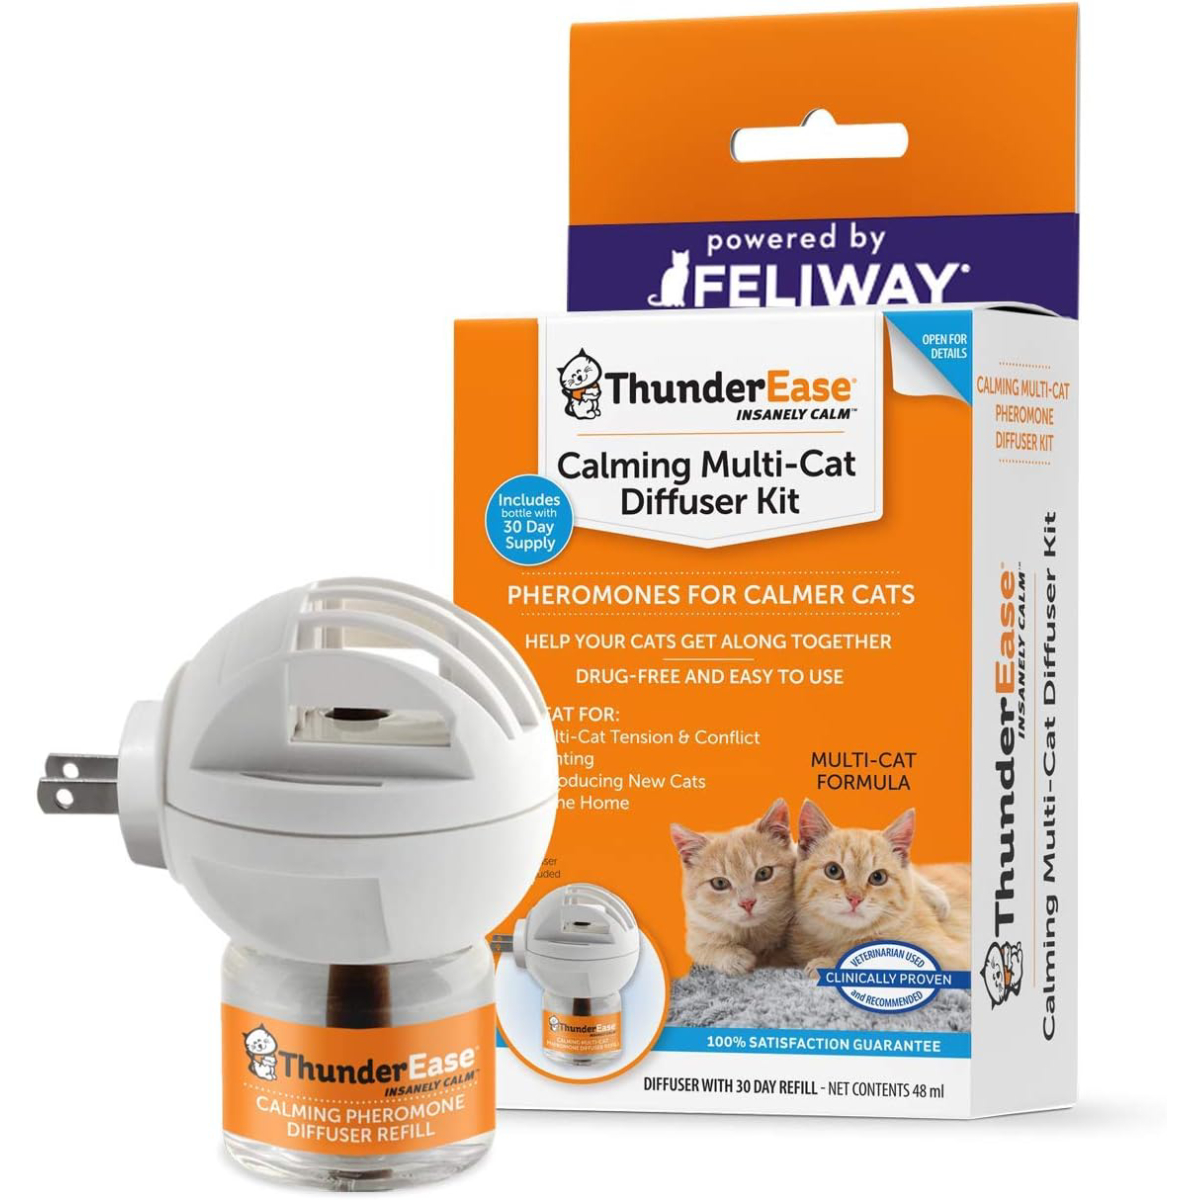 ThunderEase Cat Calming Diffuser Kit